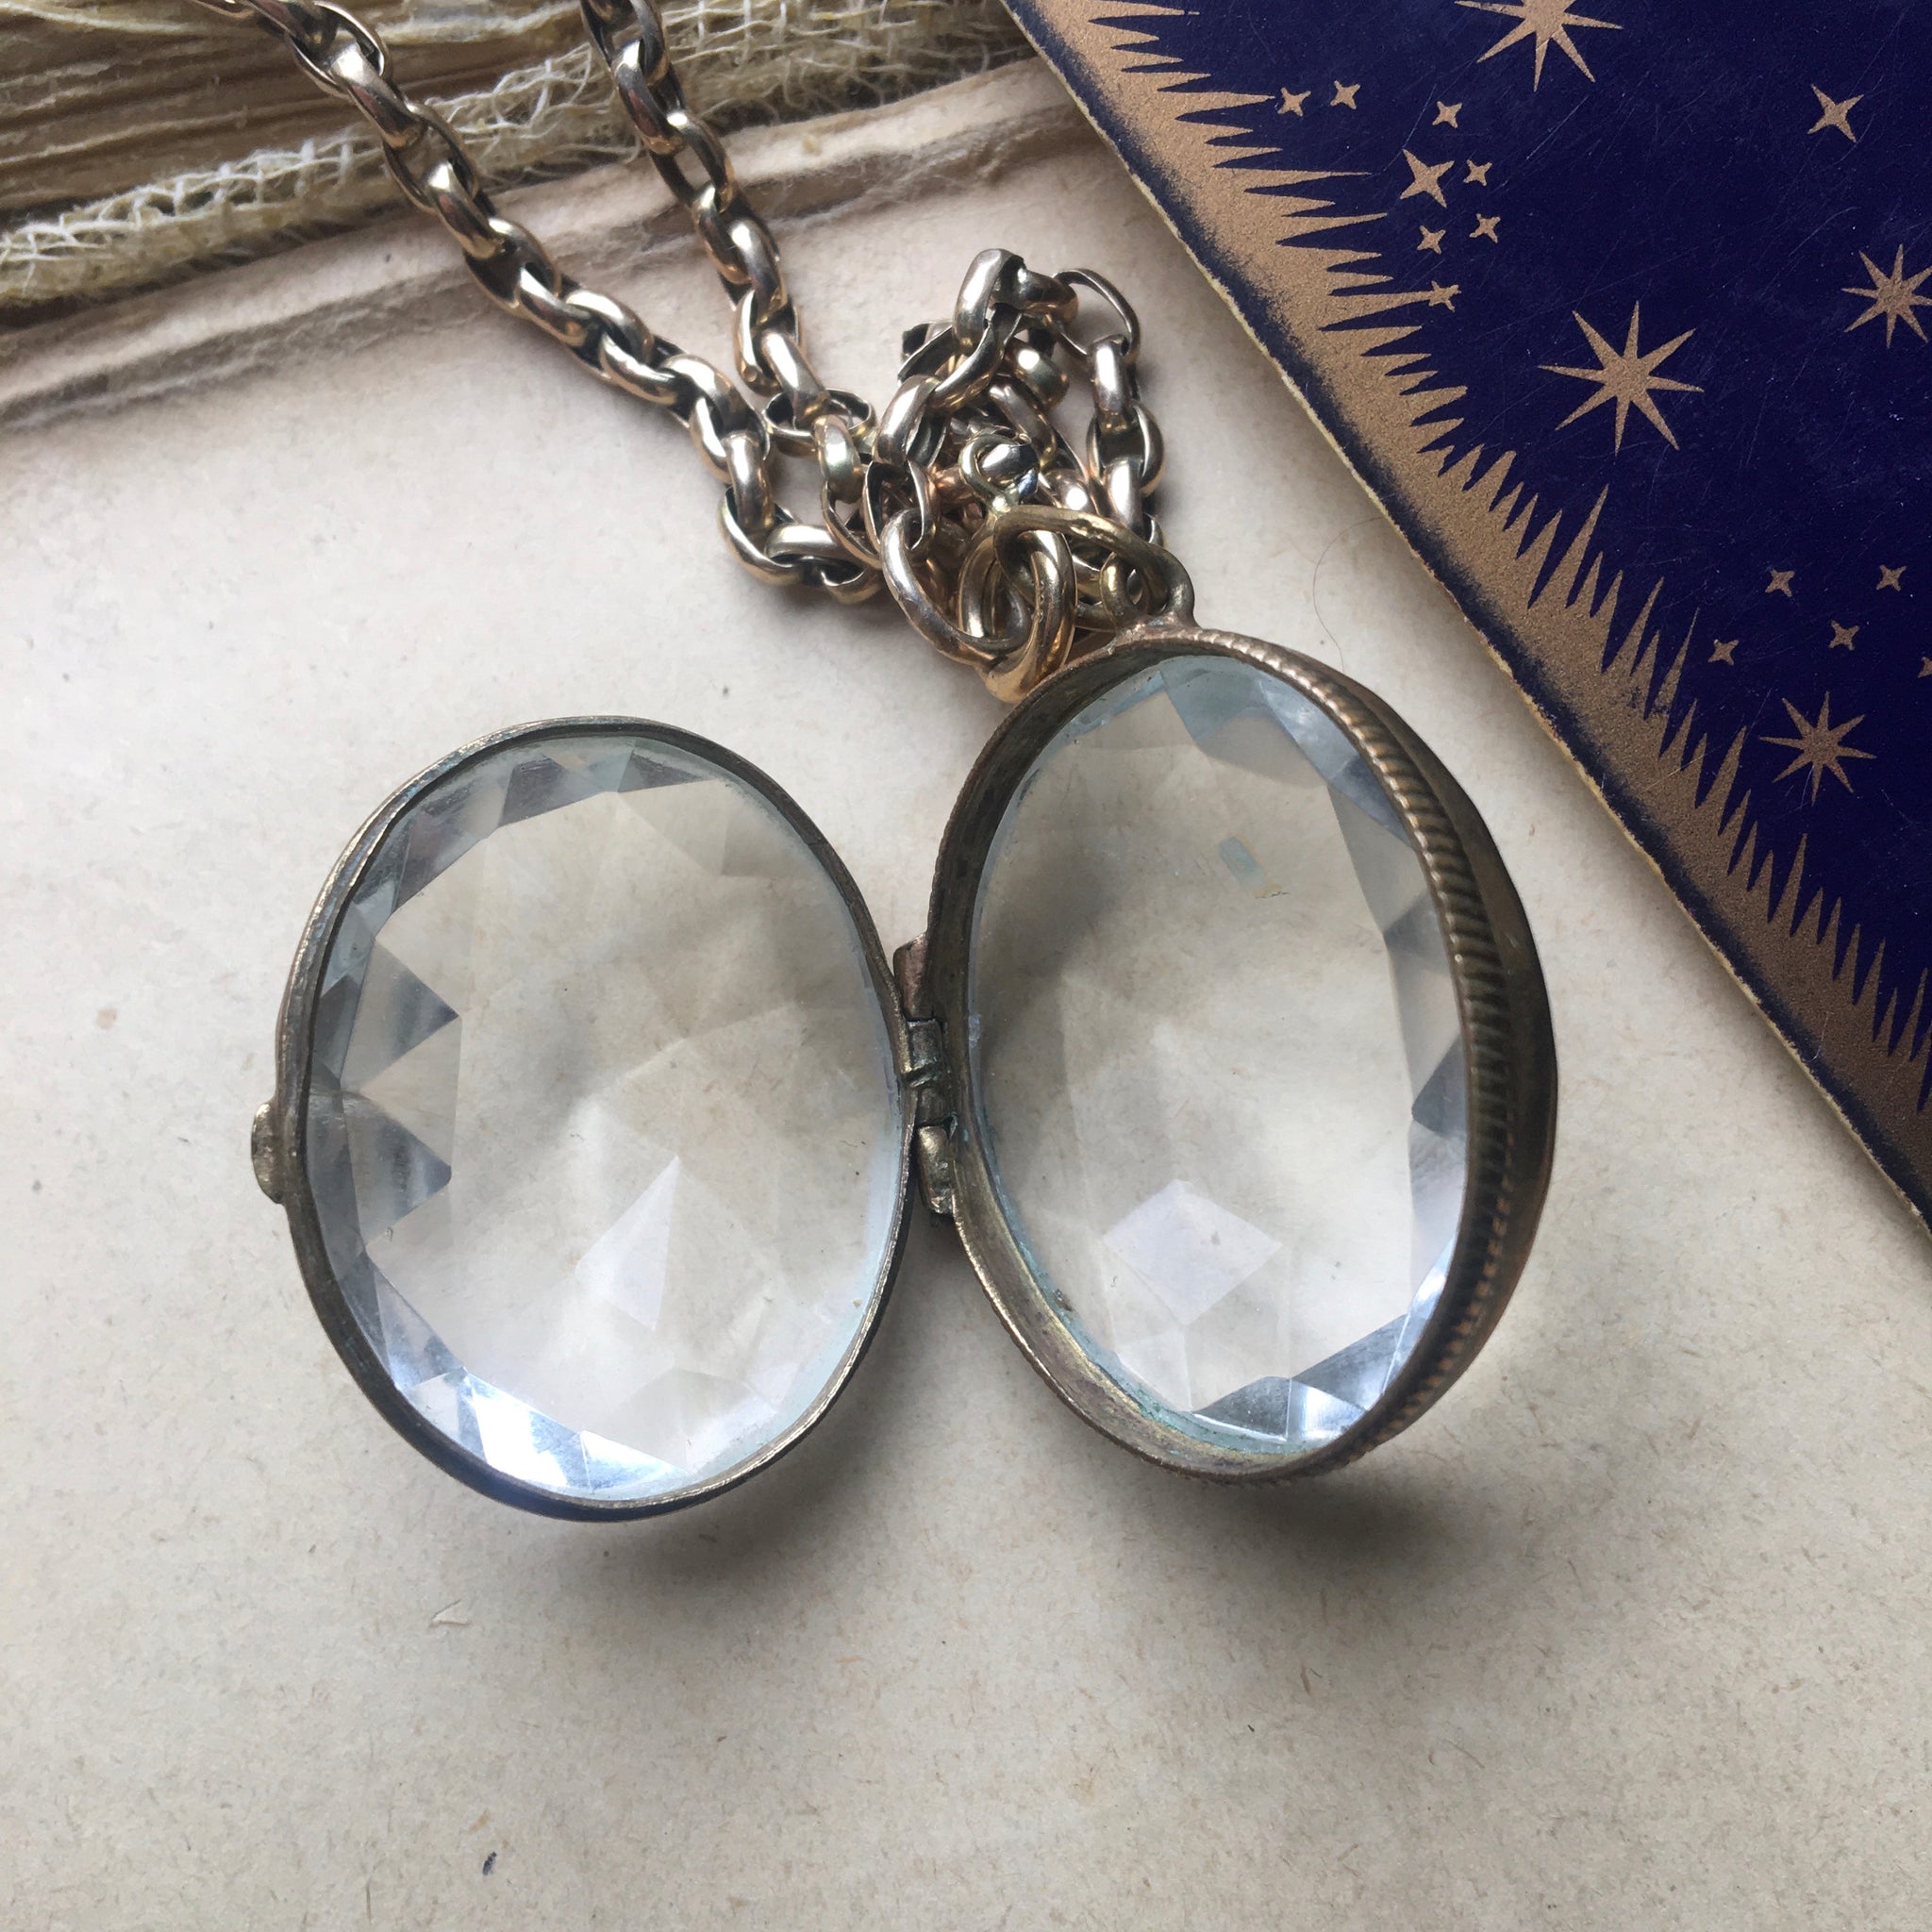 Will Wearing Rock Crystal Jewelry Make You Feel Better?